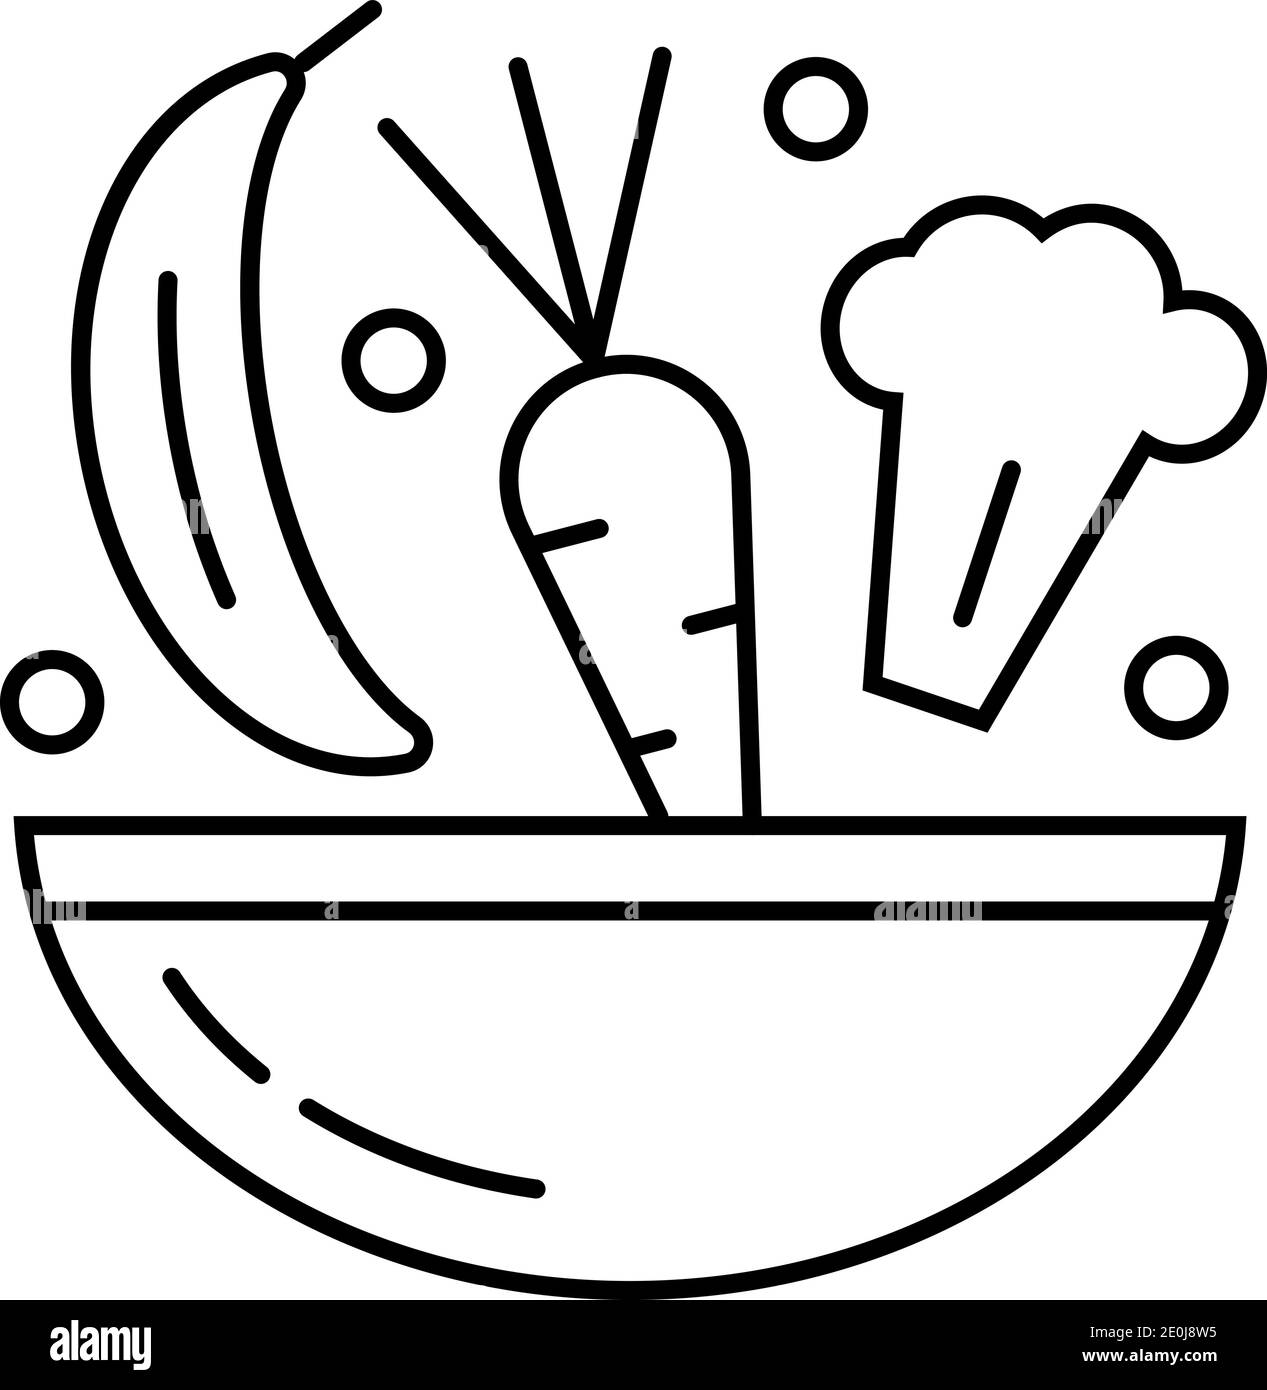 Gesundheit Diät-Symbol in Umriss-Stil. Karotte, Brokkoli, Banane, grüne Erbsen, Schüssel sind abgebildet. Stock Vektor